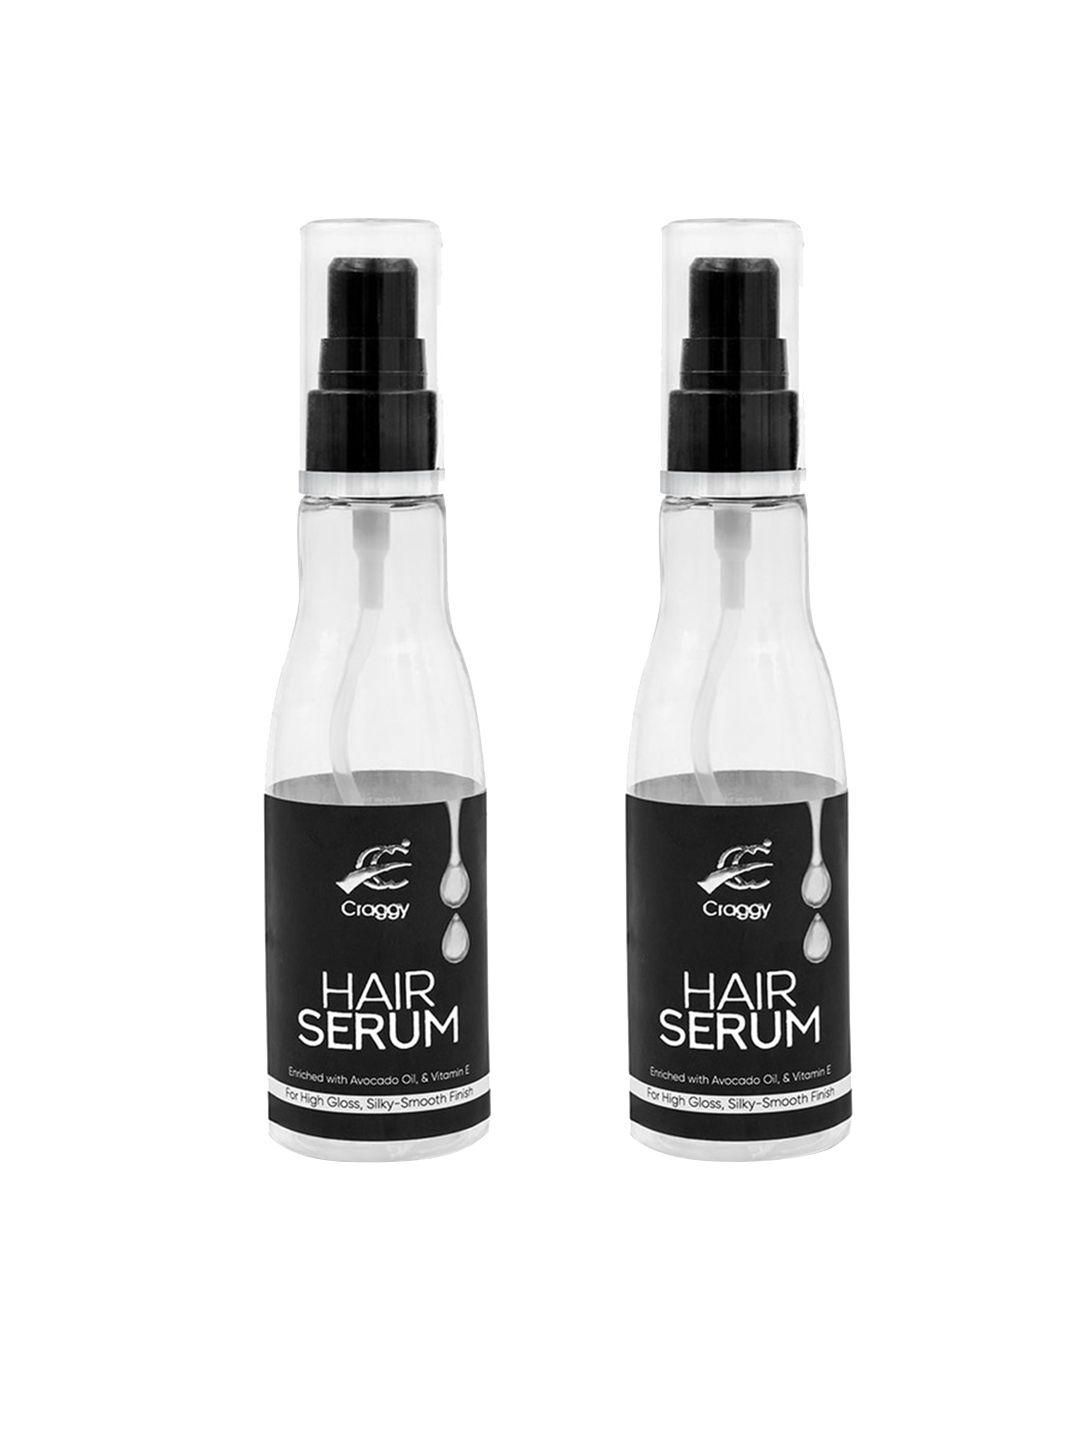 craggy cosmetic set of 2 hair serum with avocado oil & vitamin e - 100 ml each